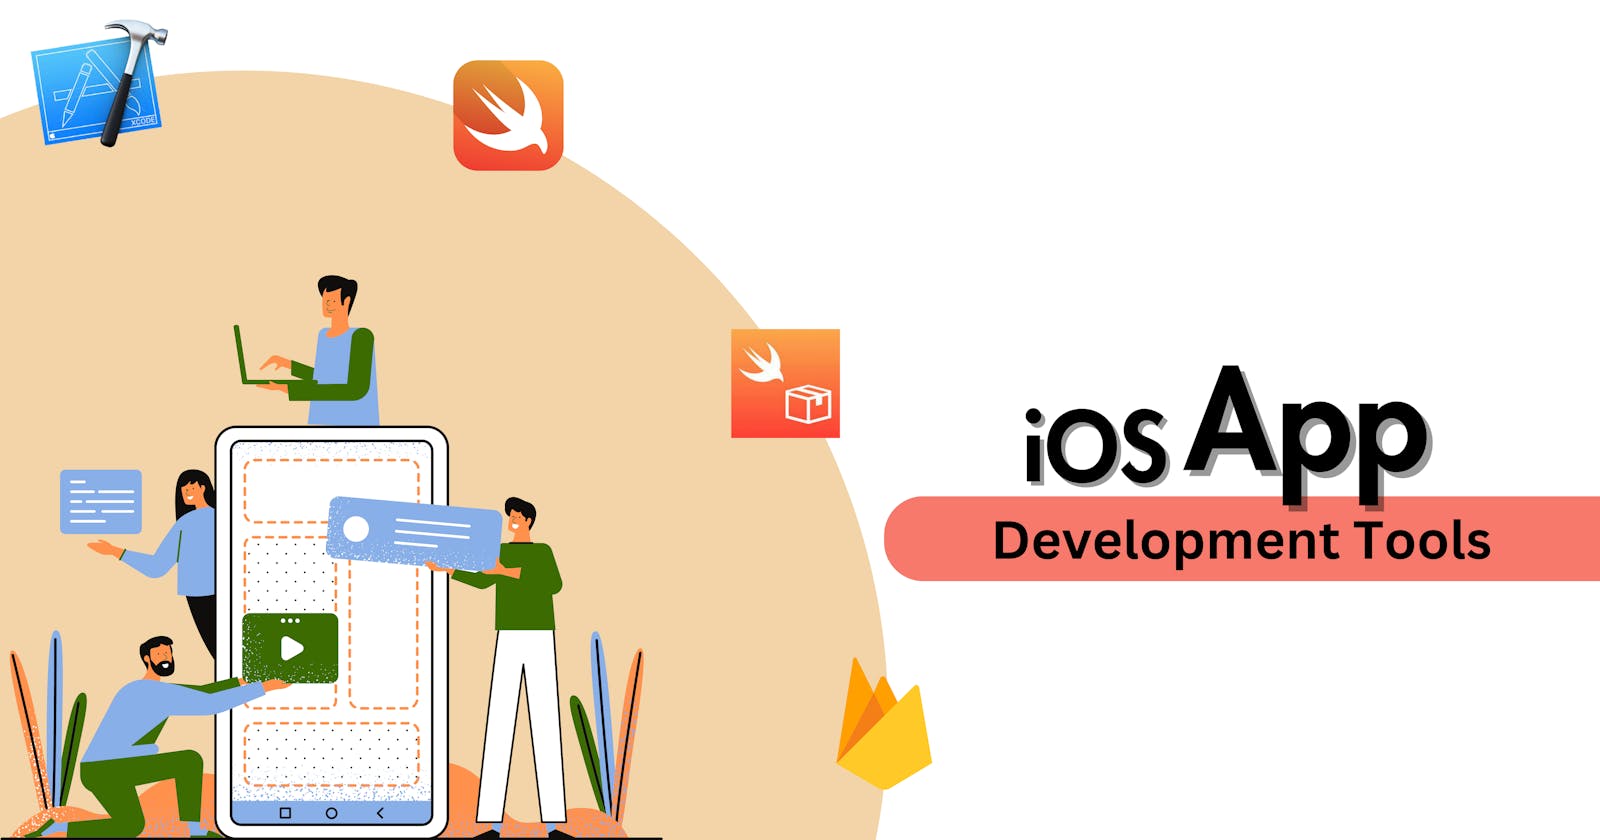 Top 10 iOS App Development Tools You Should Know